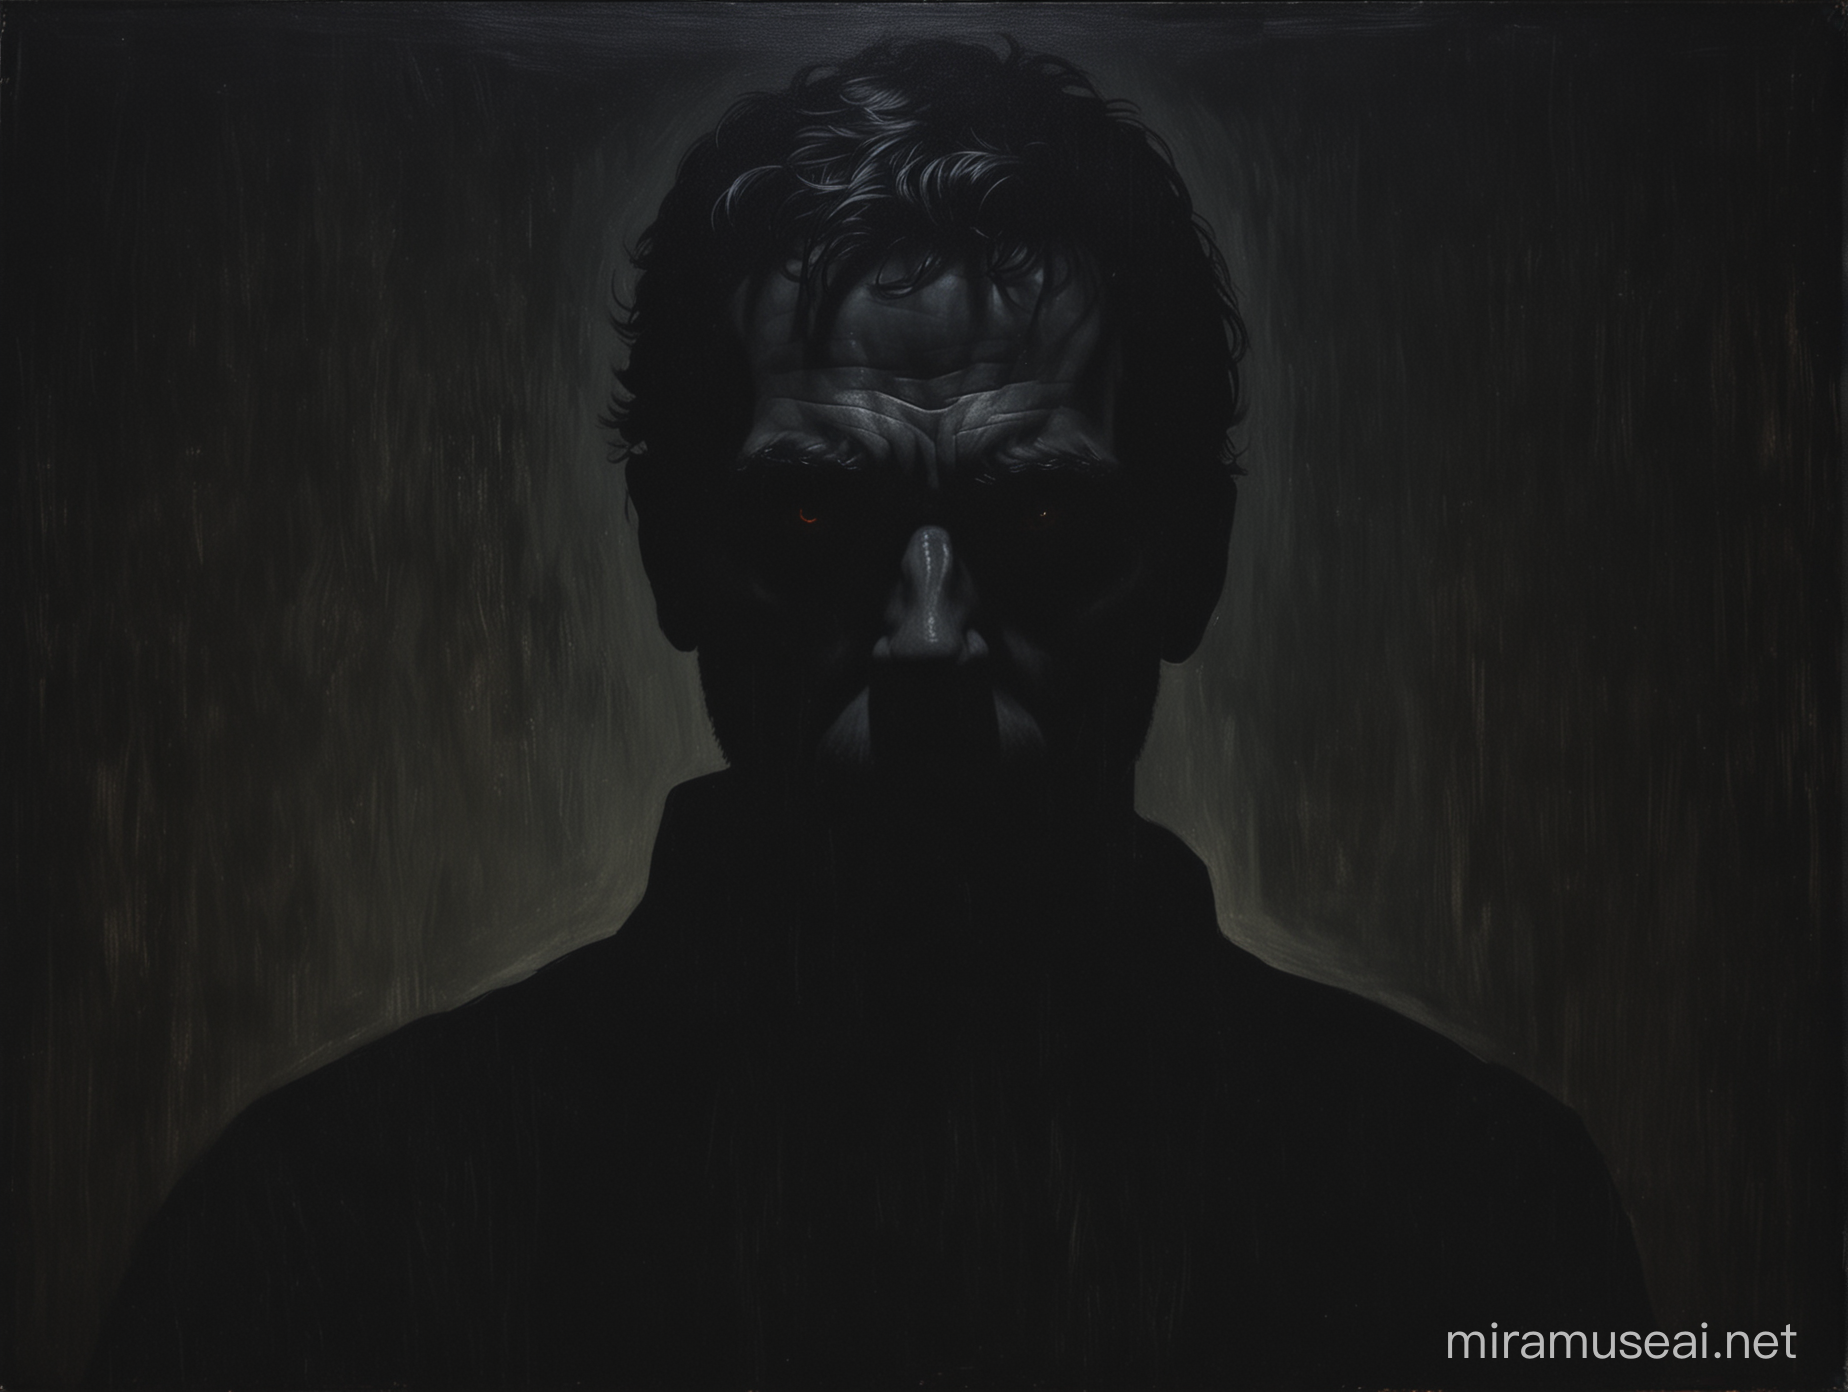 Sinister Mans Face Silhouette in Dark Night Room